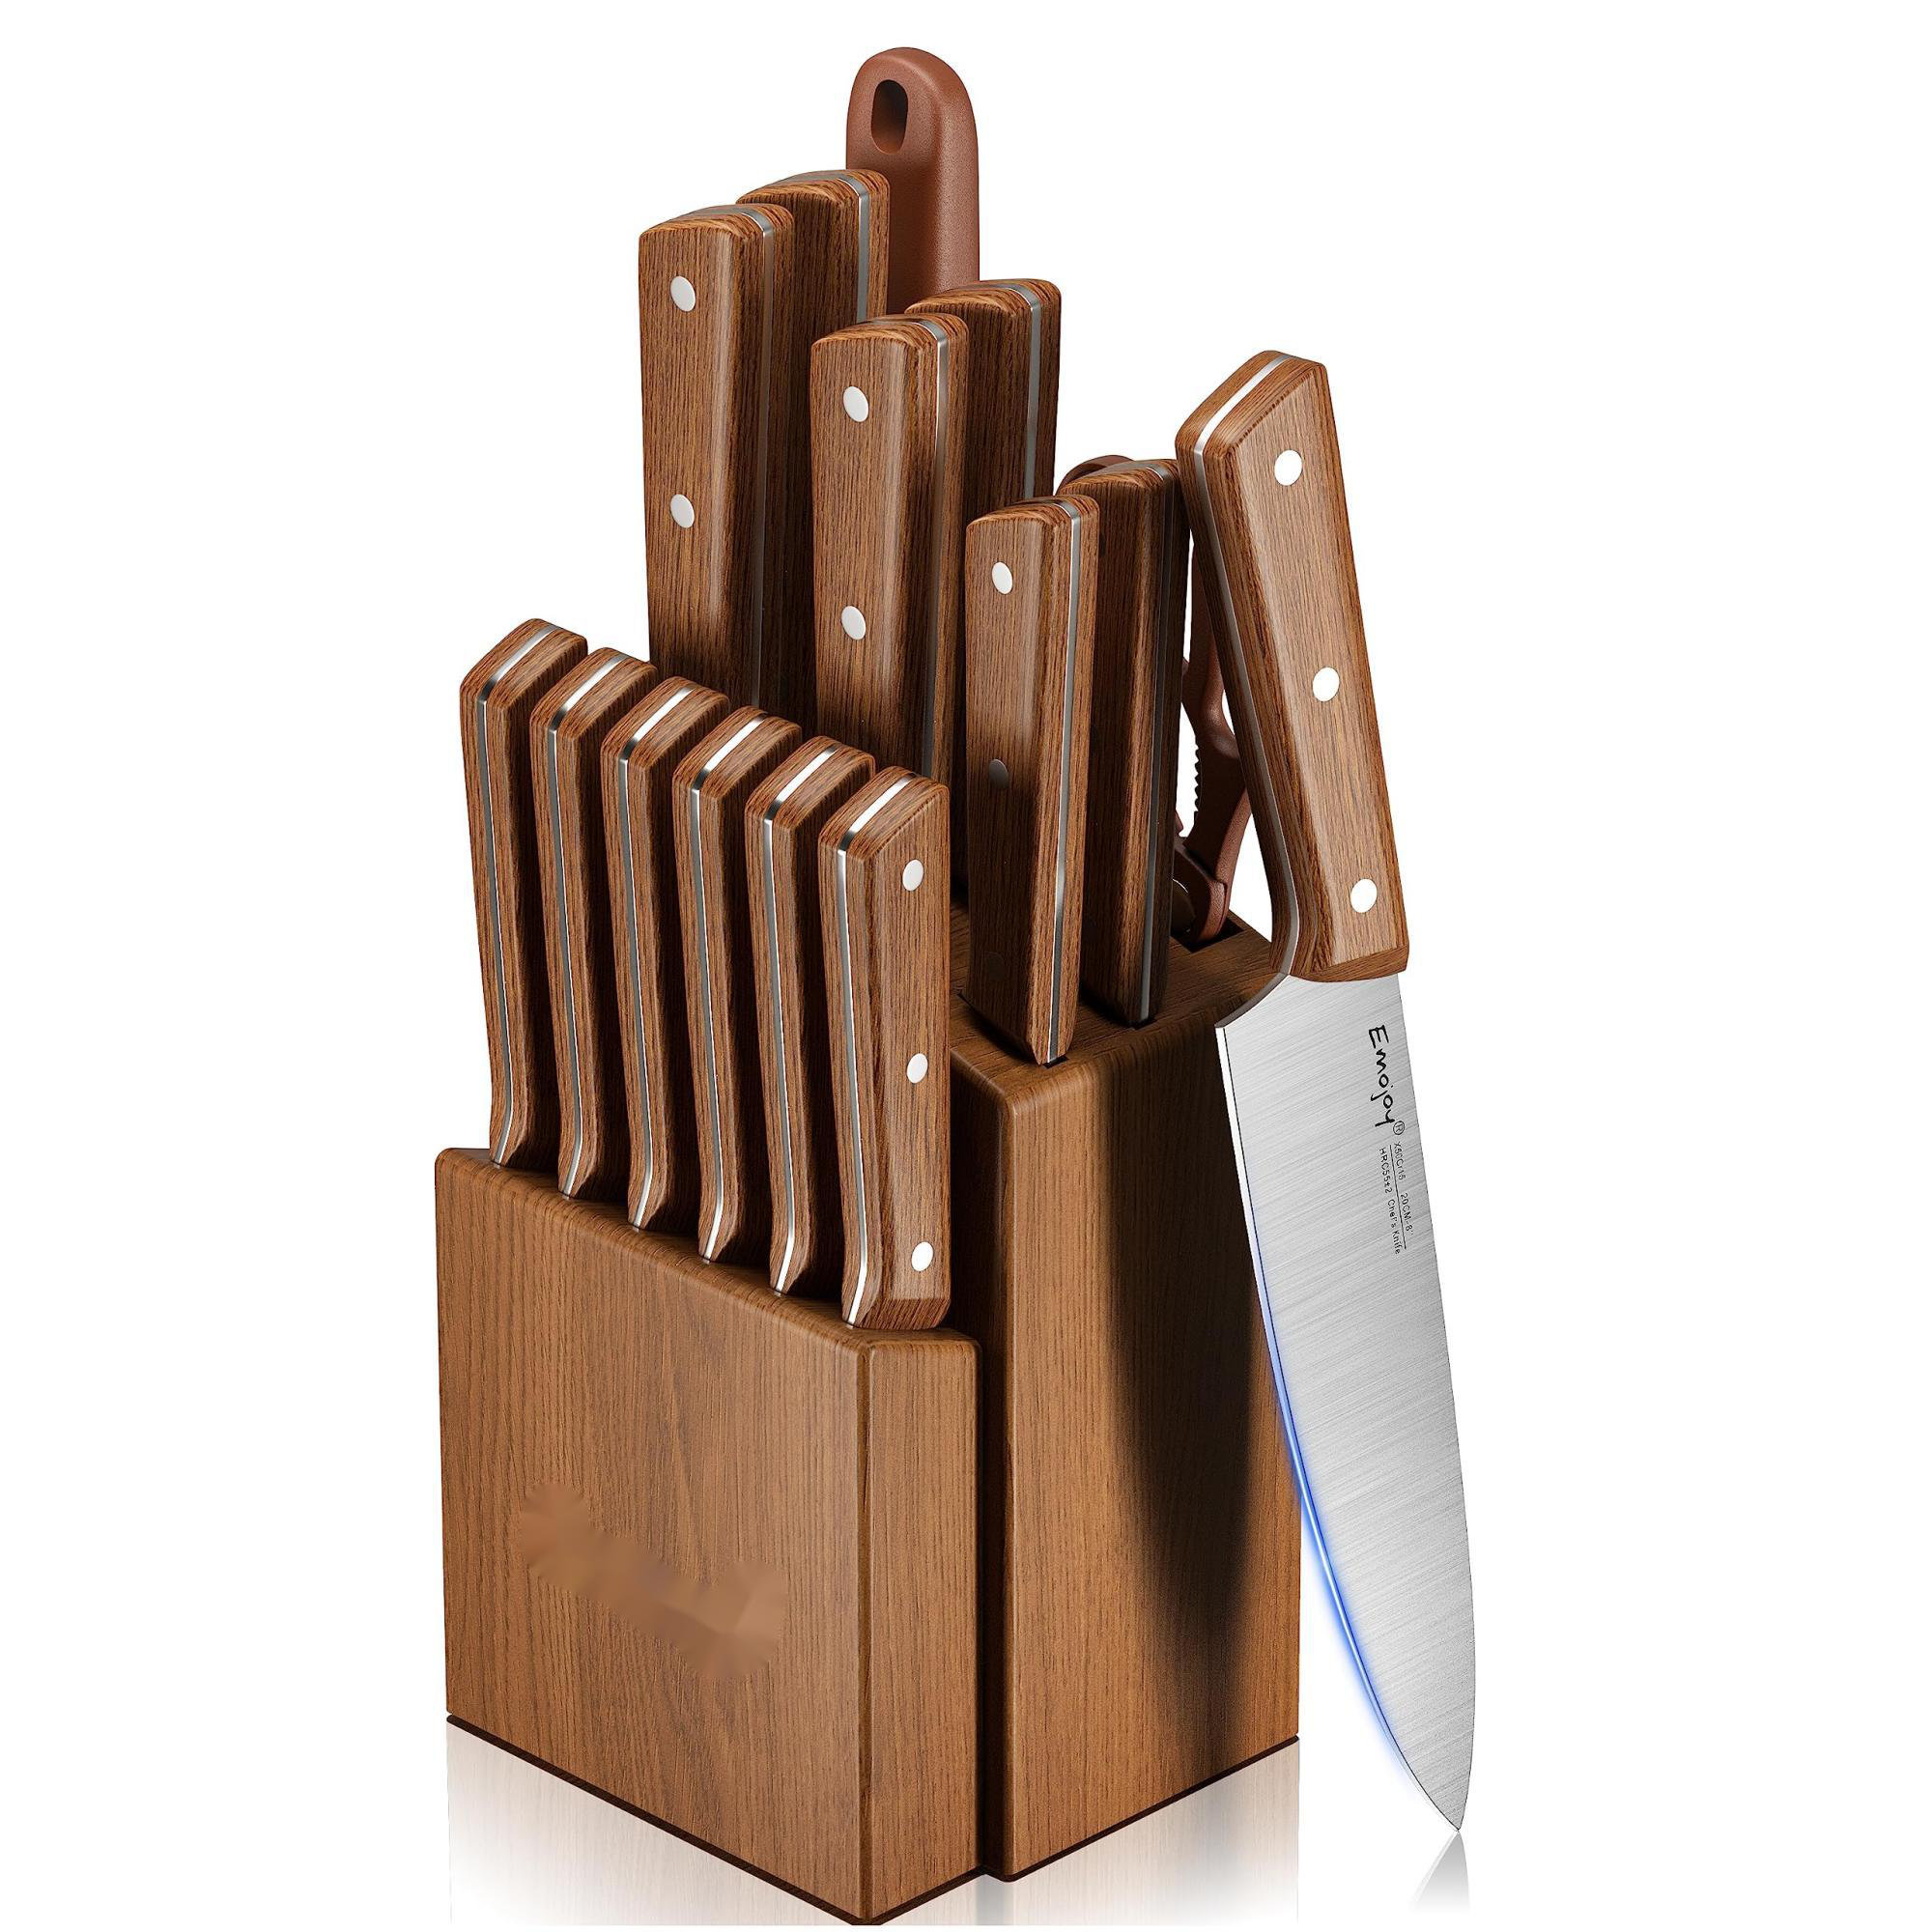 15Pcs Kitchen Knife Set w/Wooden Block Sharpener Pro Stainless Steel Chef  Knives